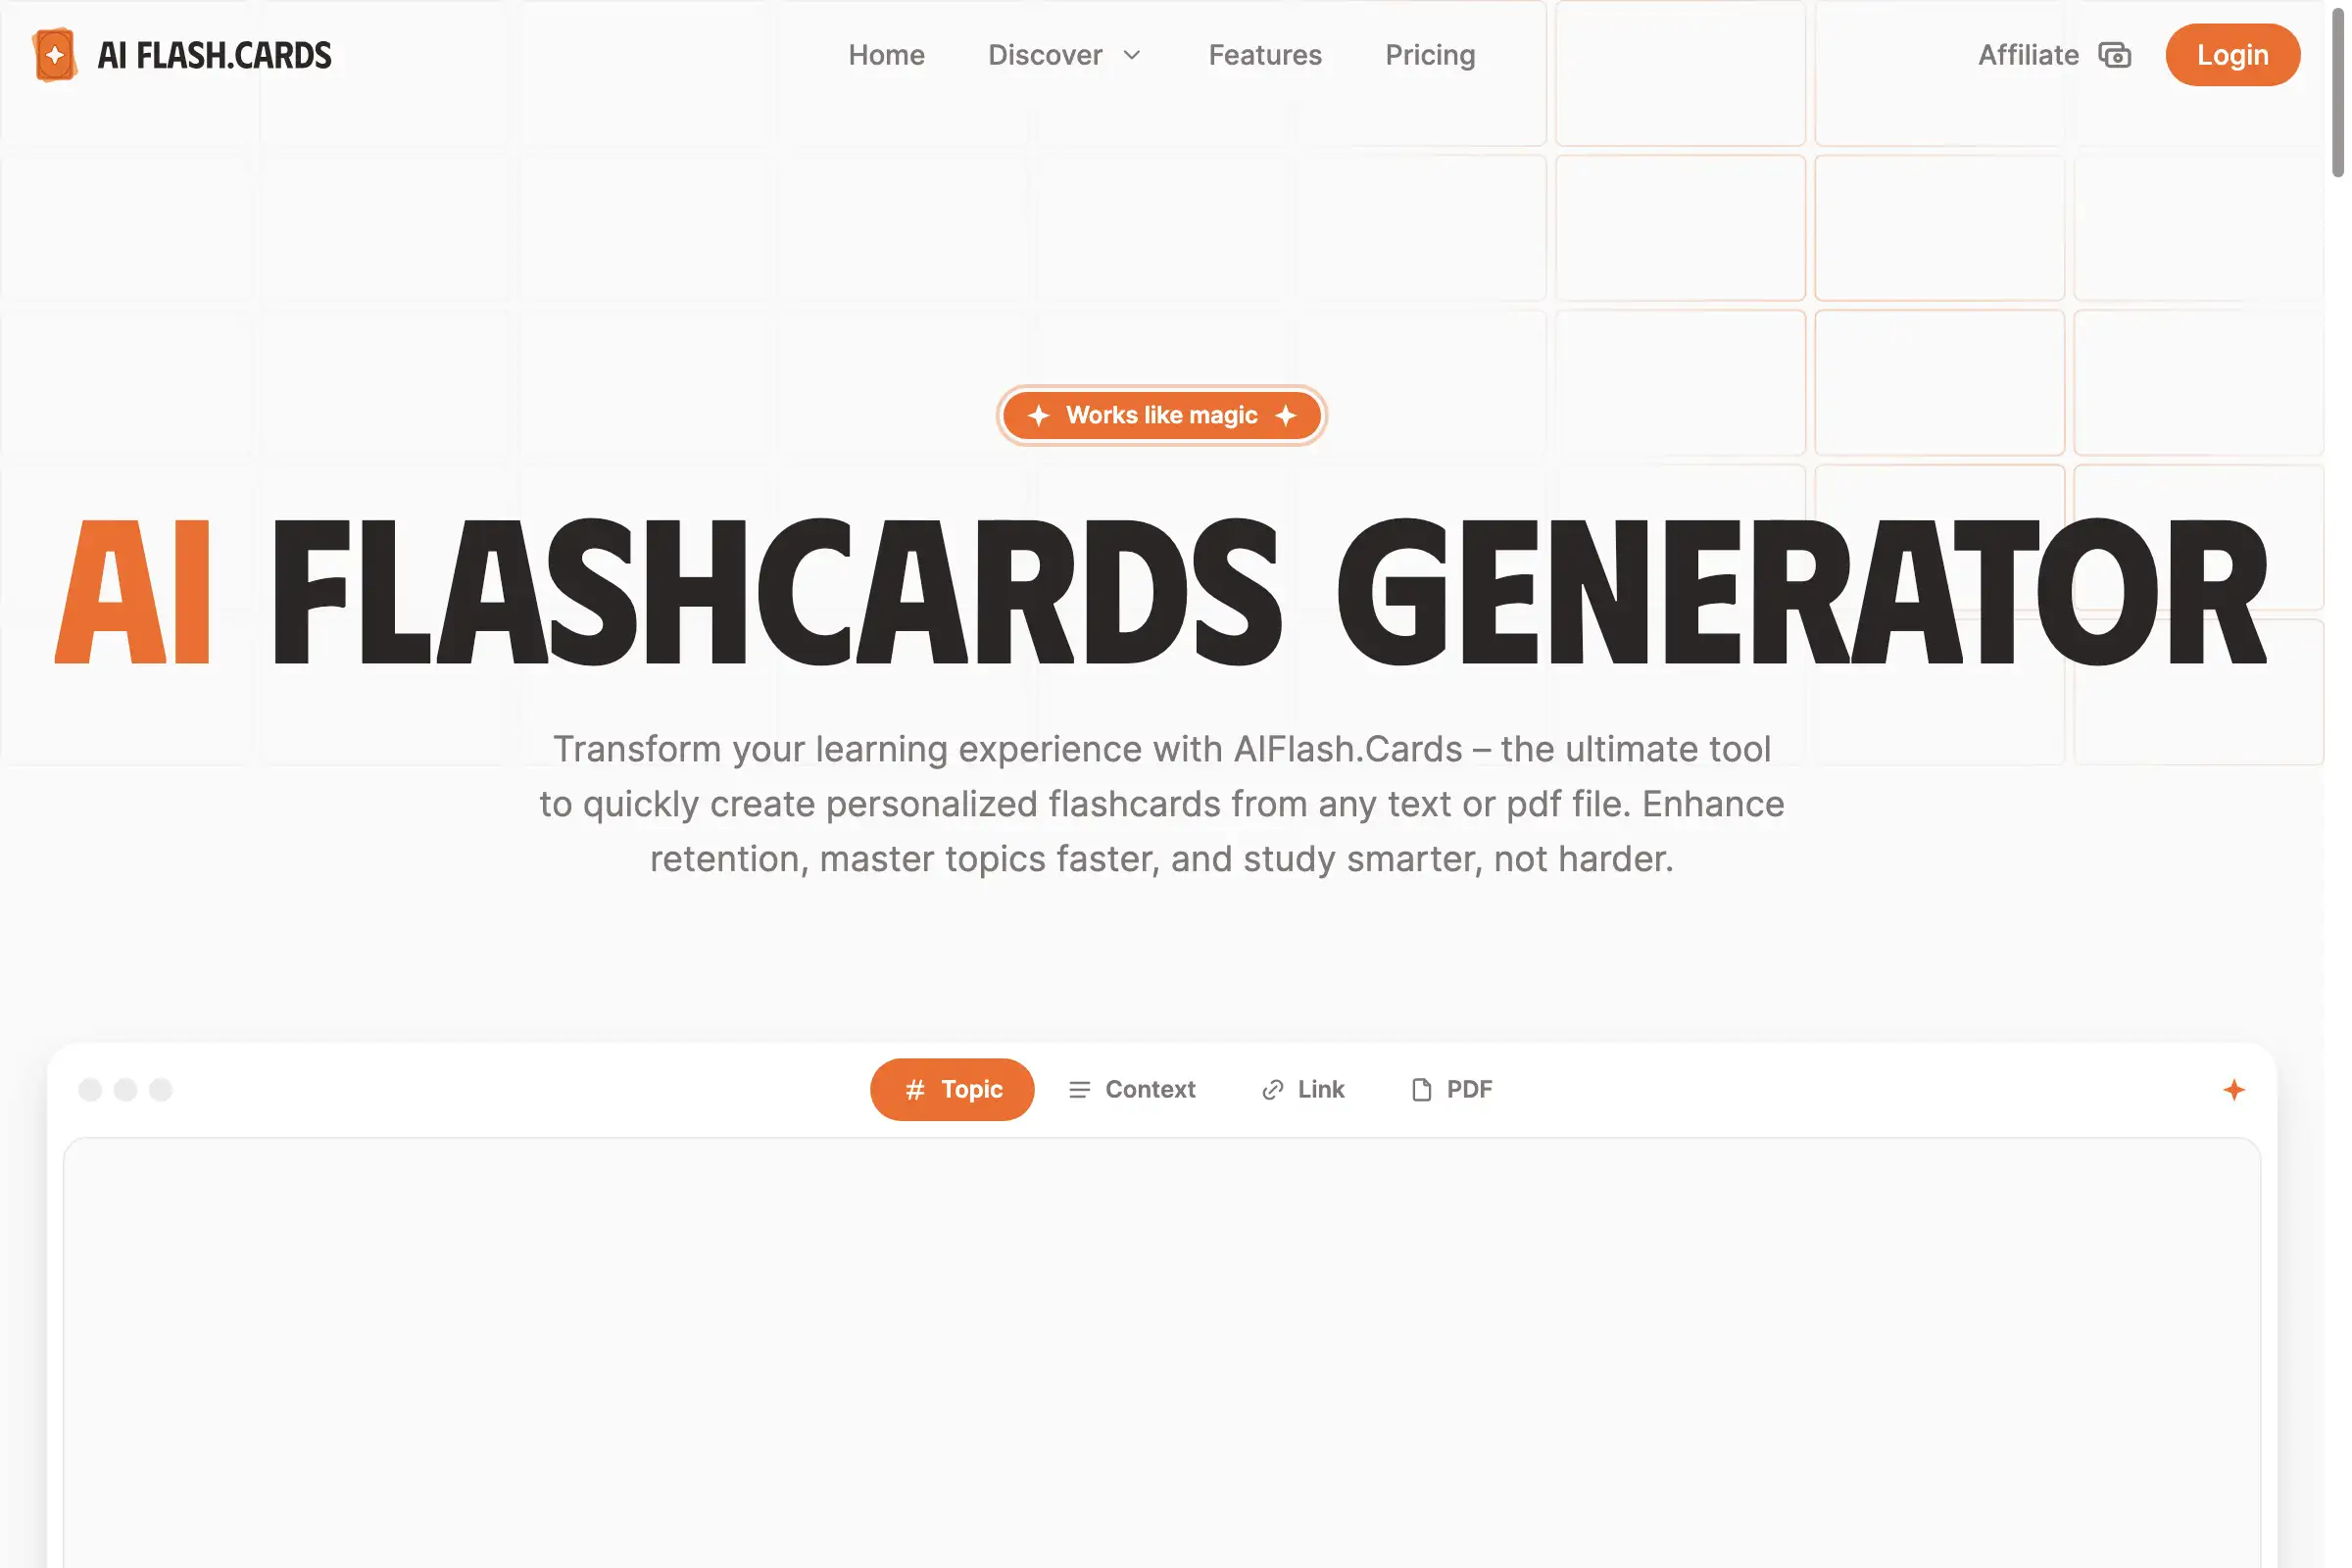 AI Flashcards Generator